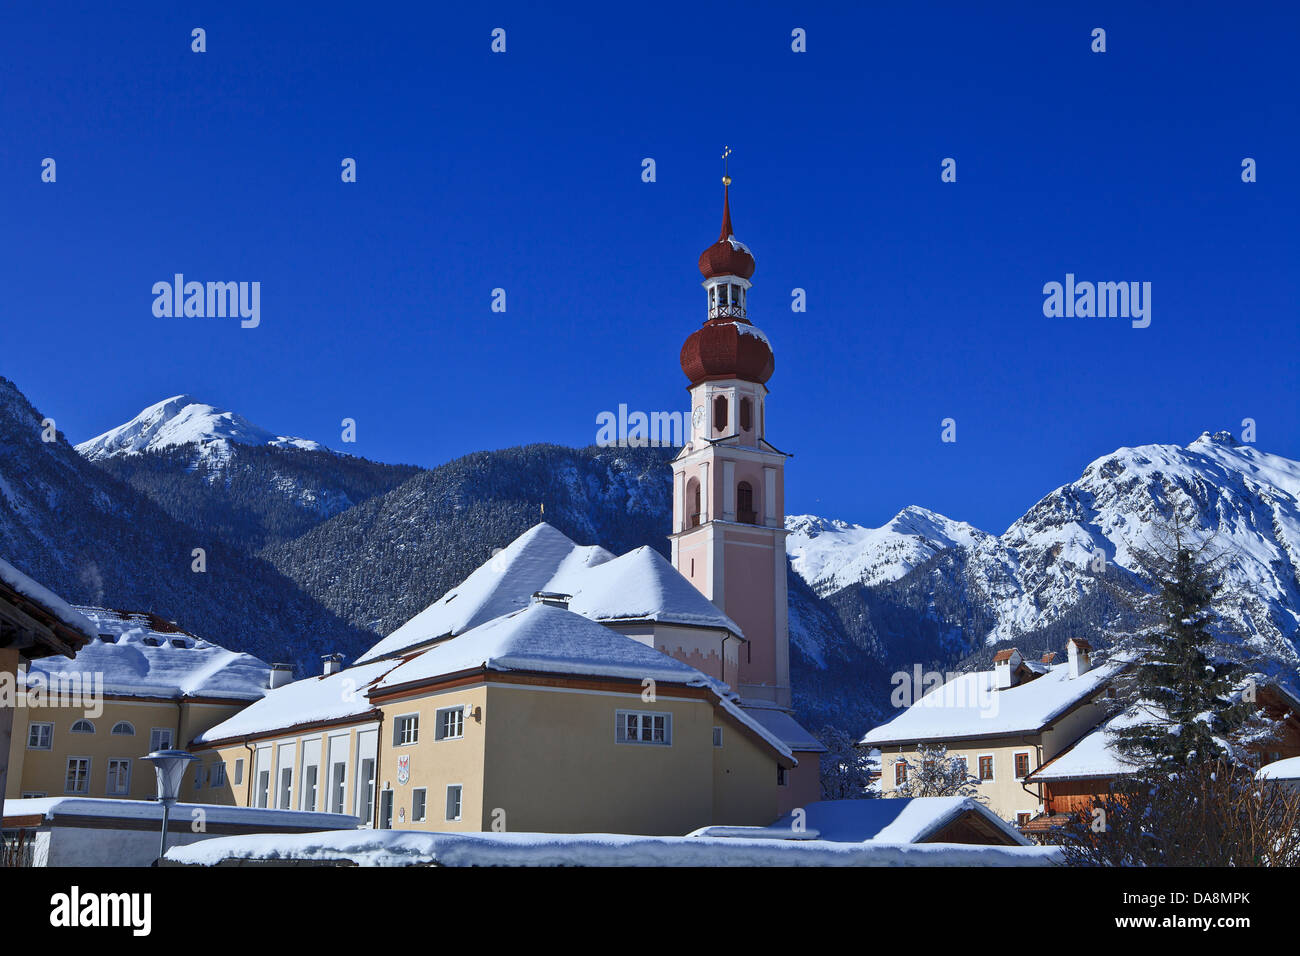 Austria, Europe, Tyrol, Gurgltal, Nassereith, winter, church, snow, sky, mountains, Lechtal, Lech valley, Alps, sky, blue, white Stock Photo